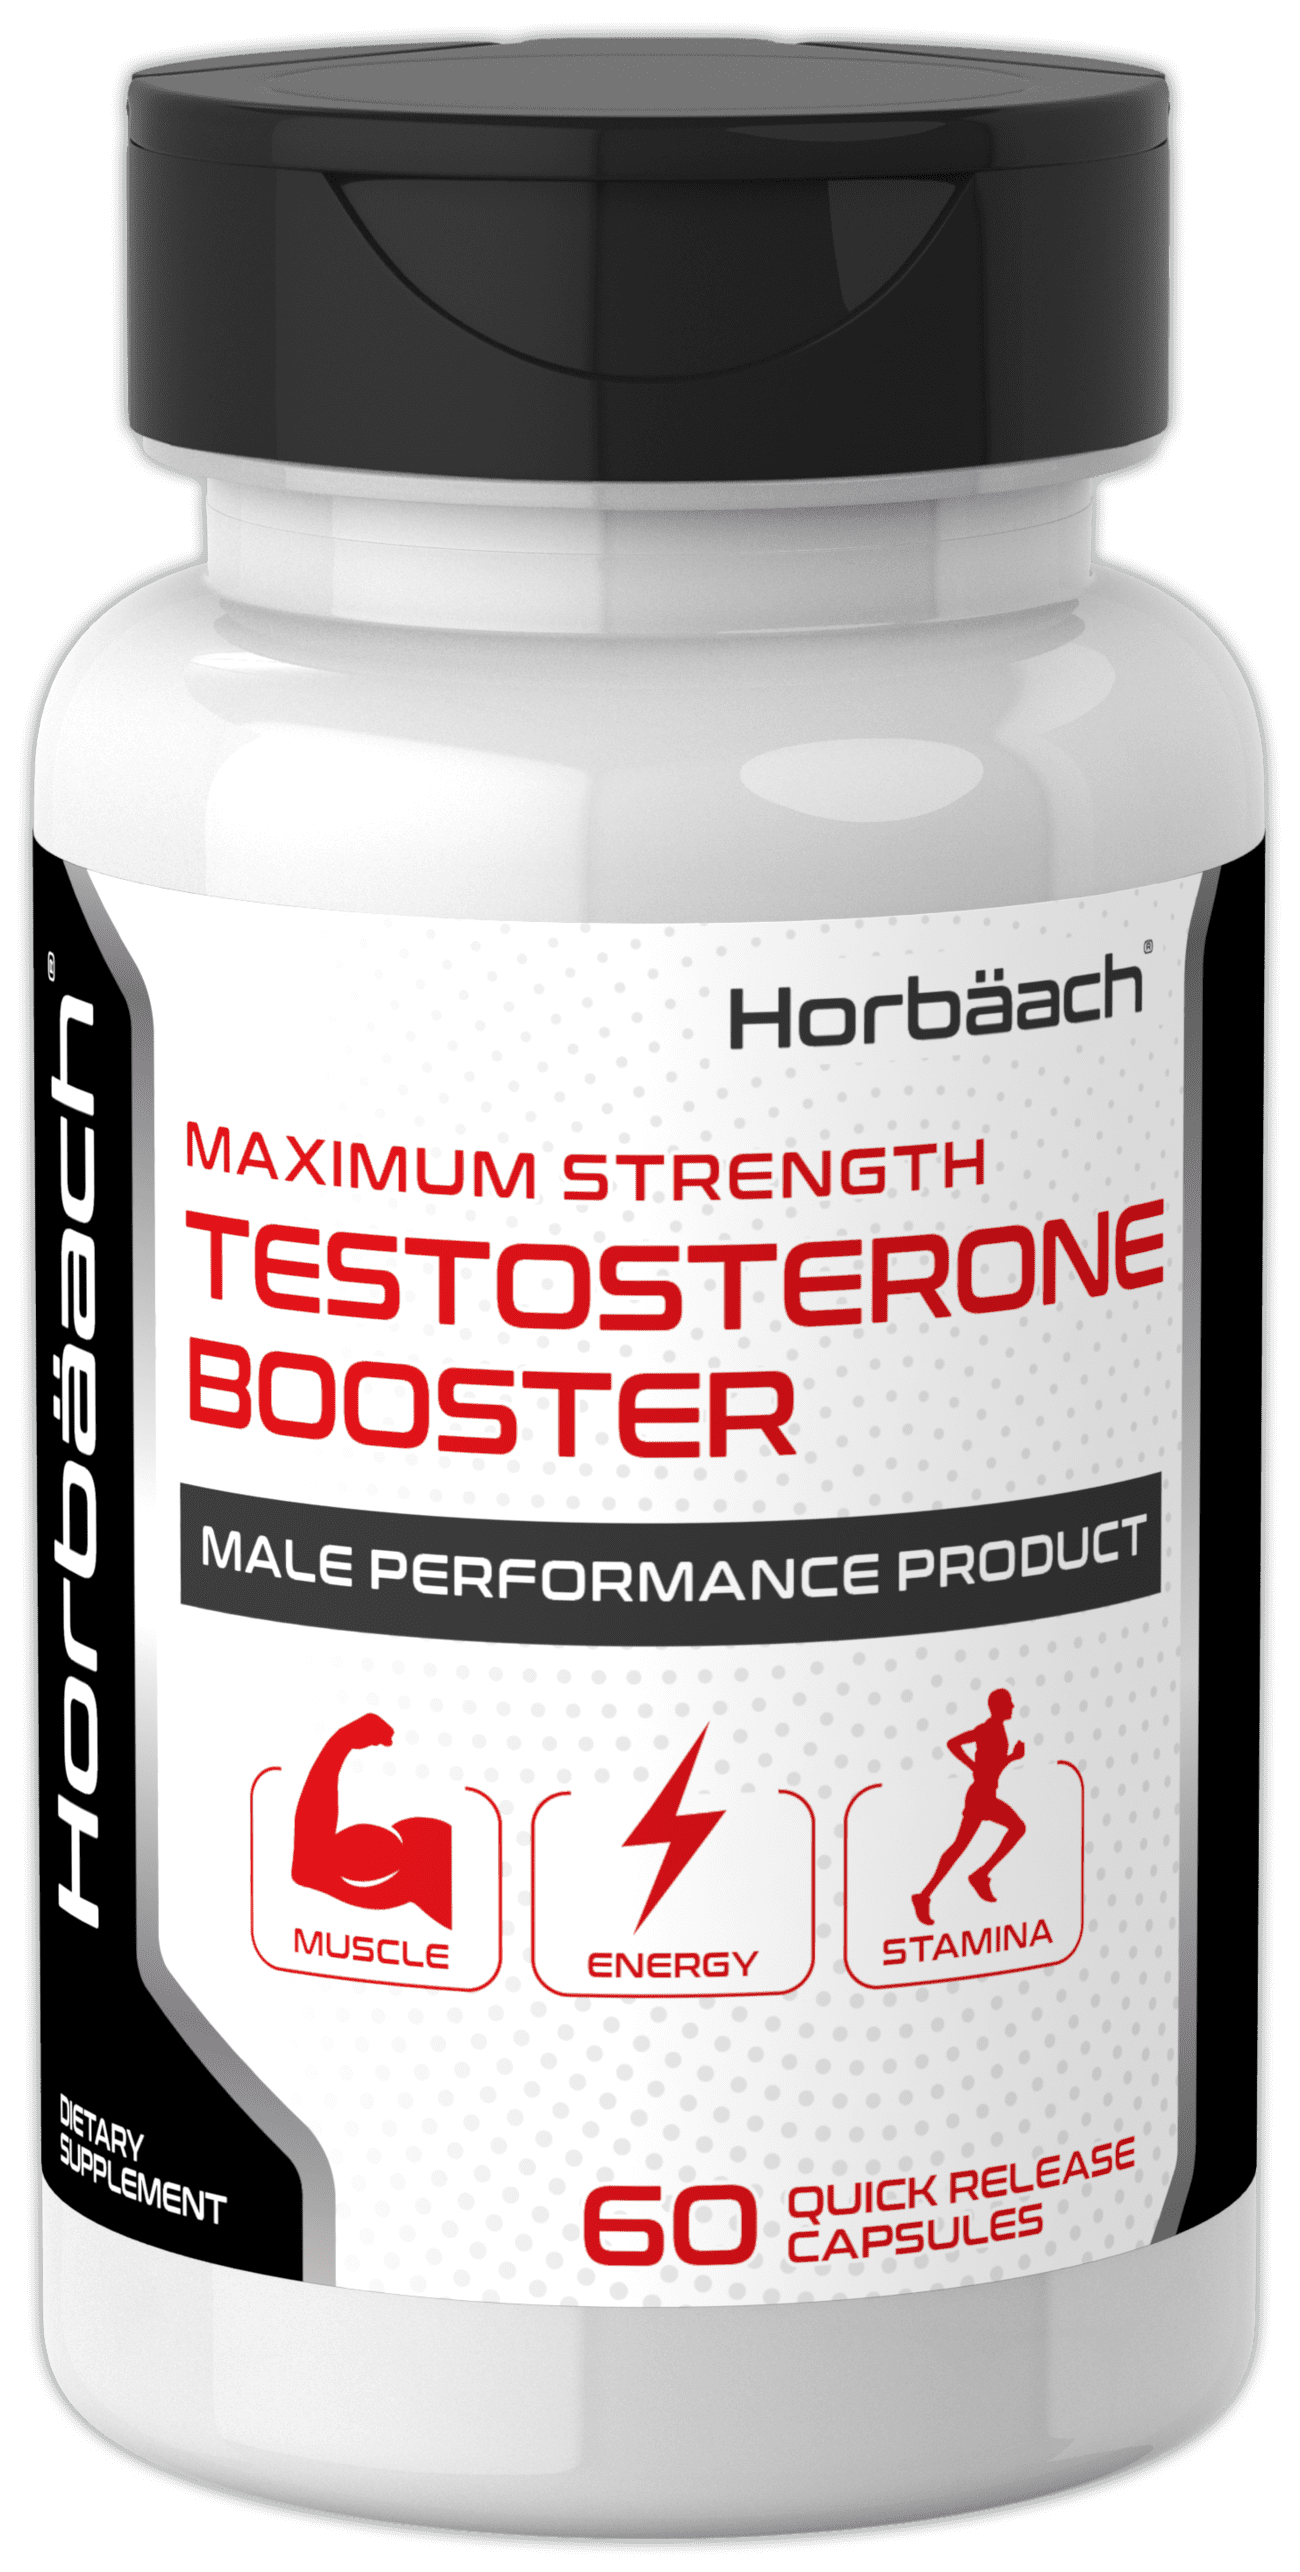 Testosterone Booster for Men, 60 Capsules, Vegetarian Formula